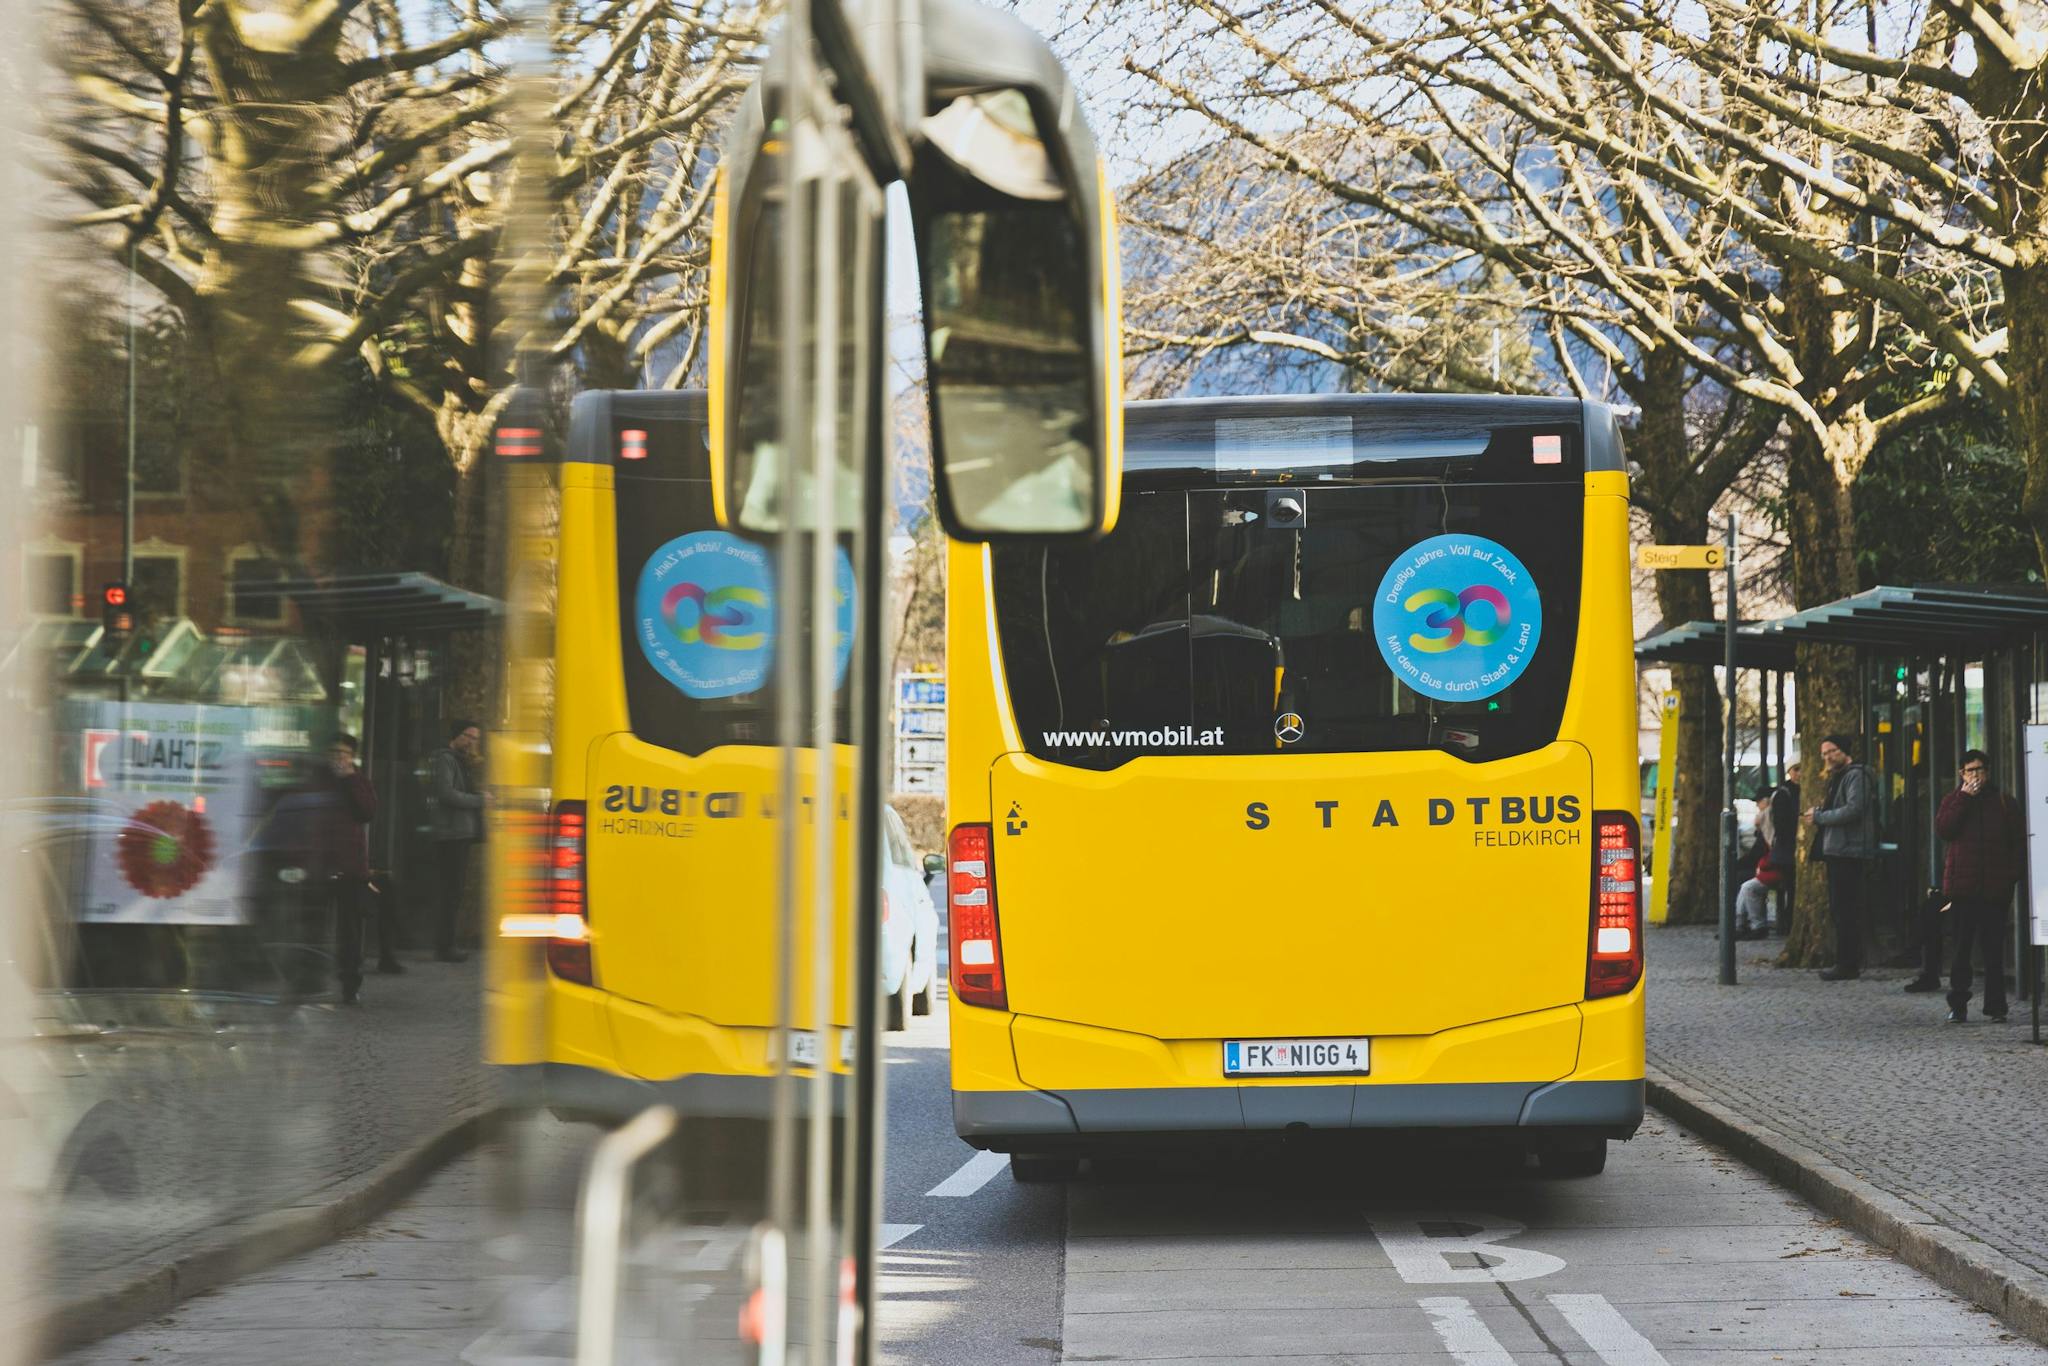 30 Jahre Stadtbus Feldkirch und Landbus Oberes Rheintal © Patricia Keckeis